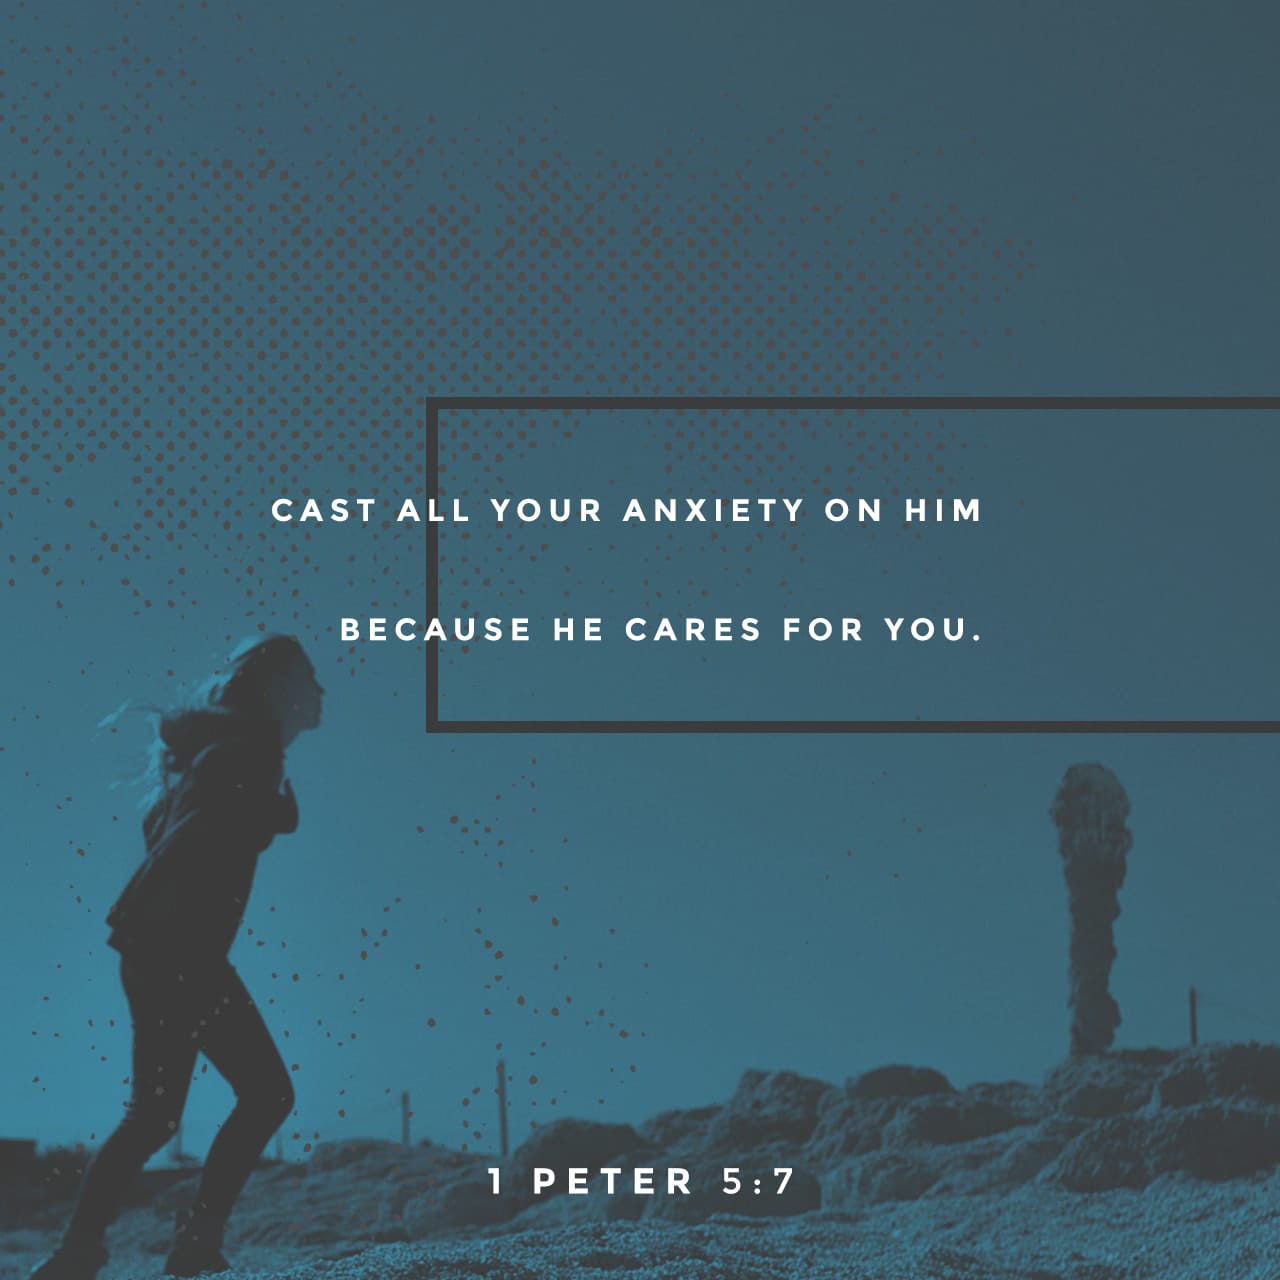 1 Peter 5:7. 